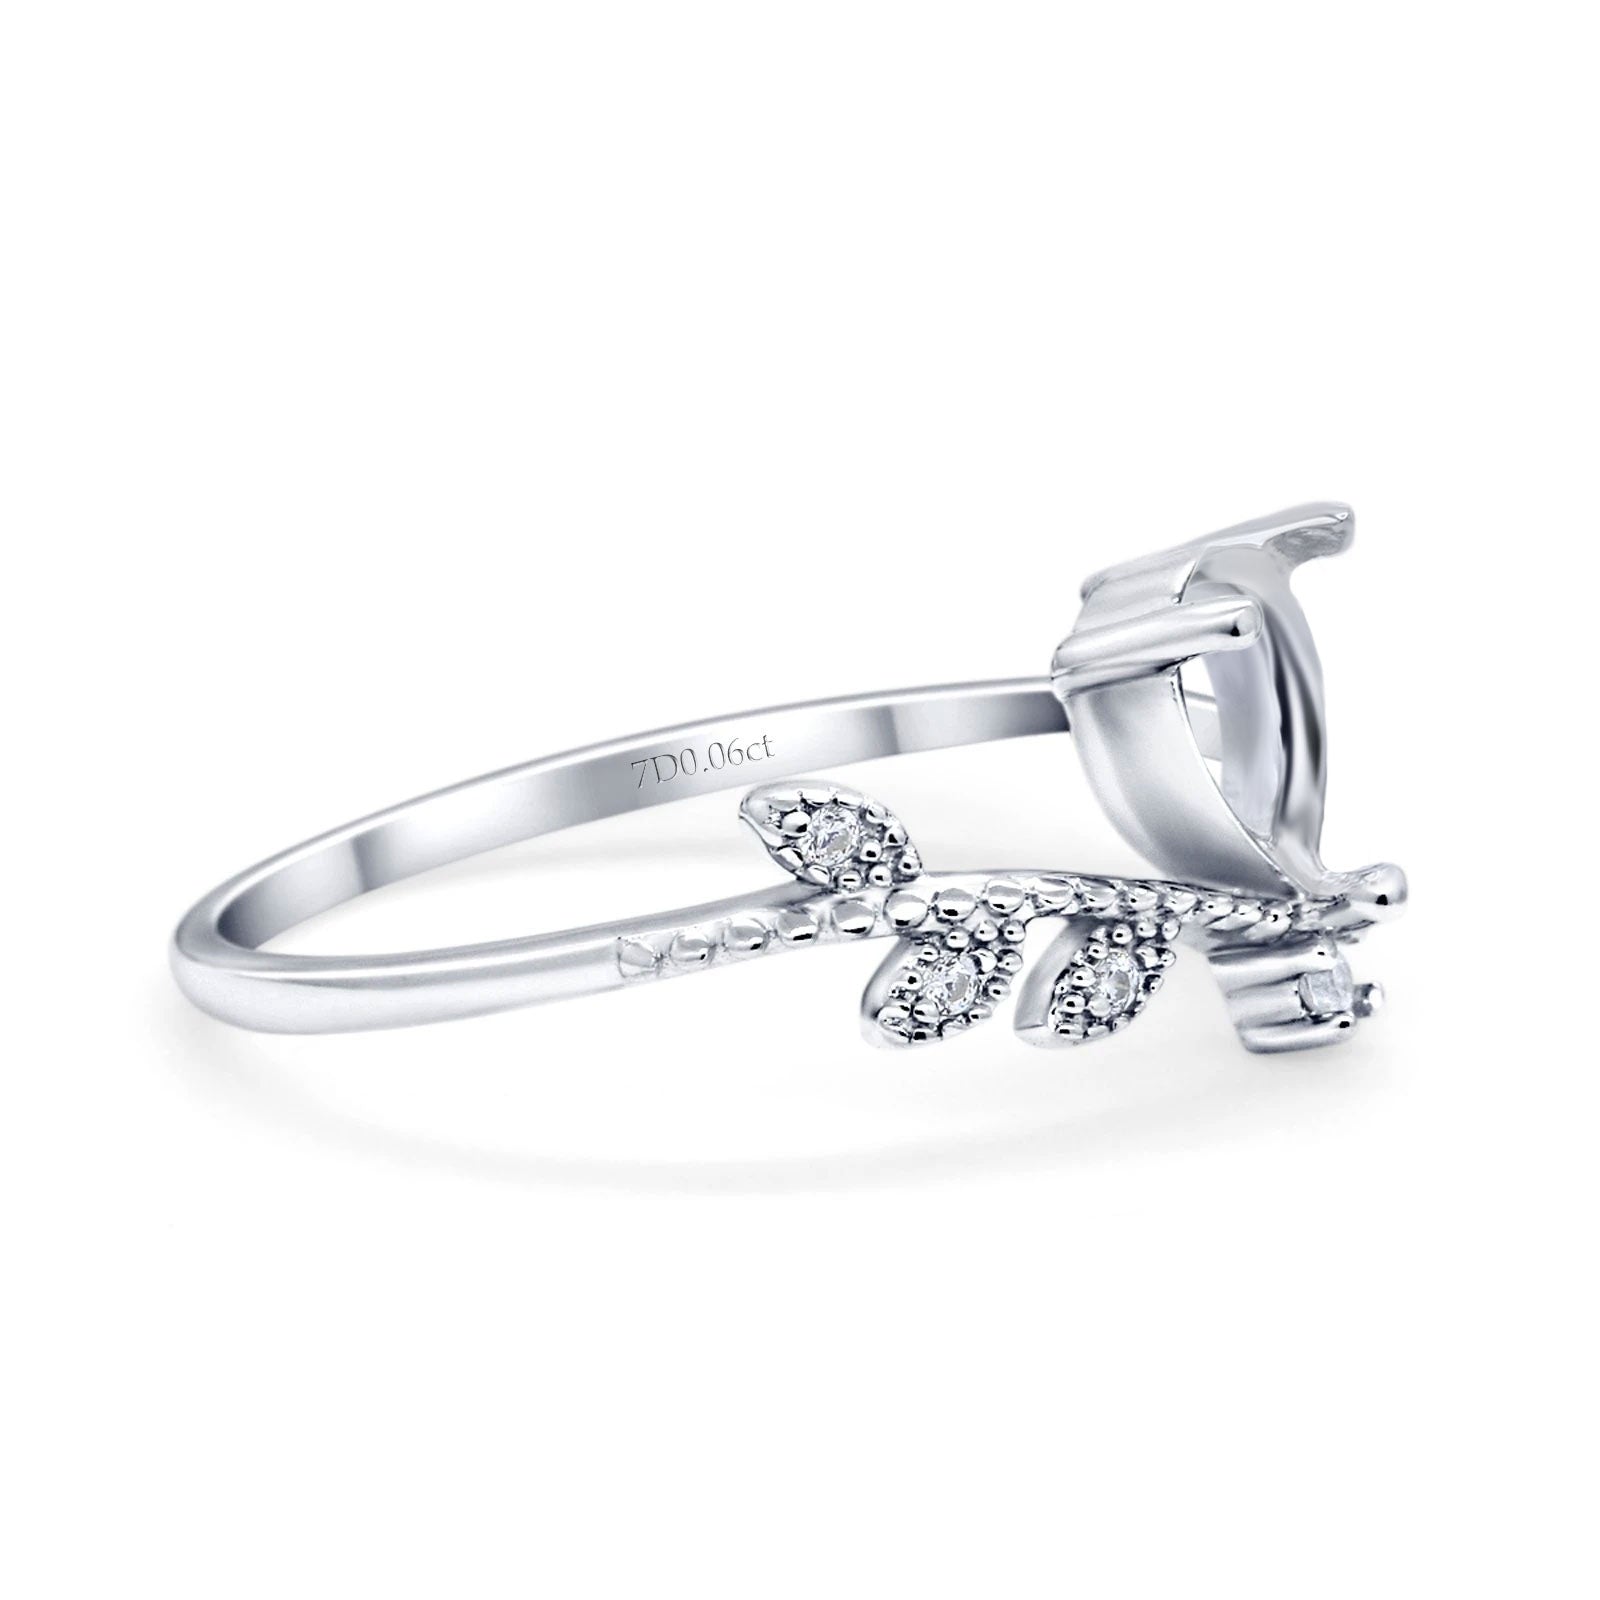 14K Gold 0.06ct Pear 7mmx5mm G SI Semi Mount Diamond Engagement Wedding Ring